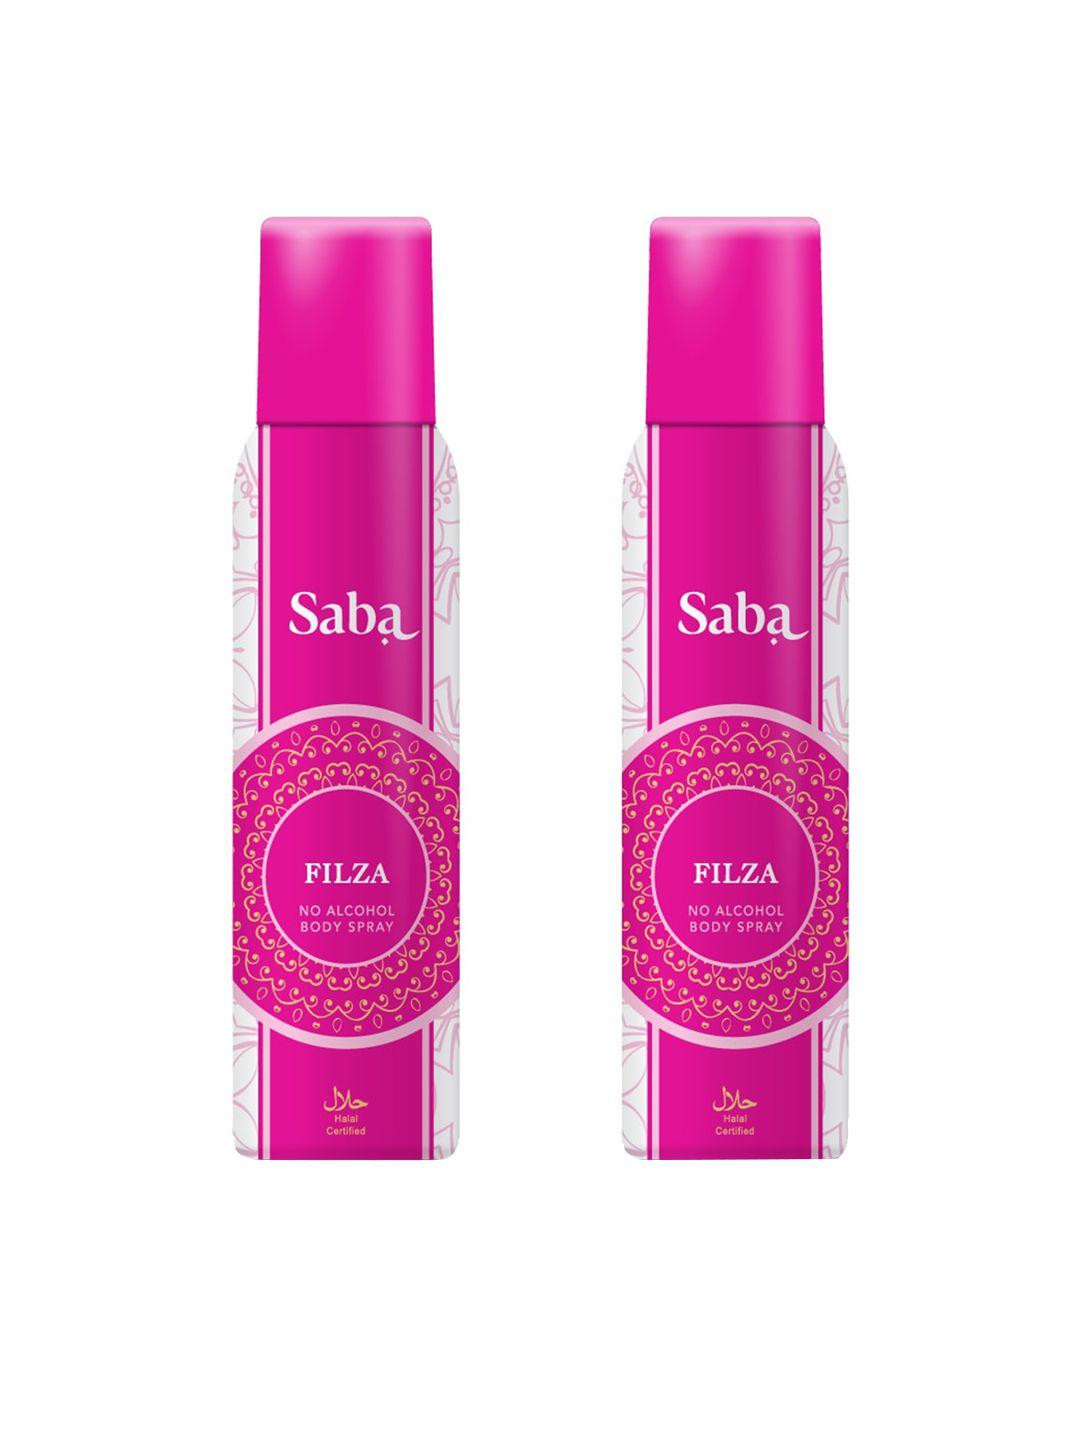 saba women set of 2 vegan filza no alcohol deodorant body spray - 150 ml each